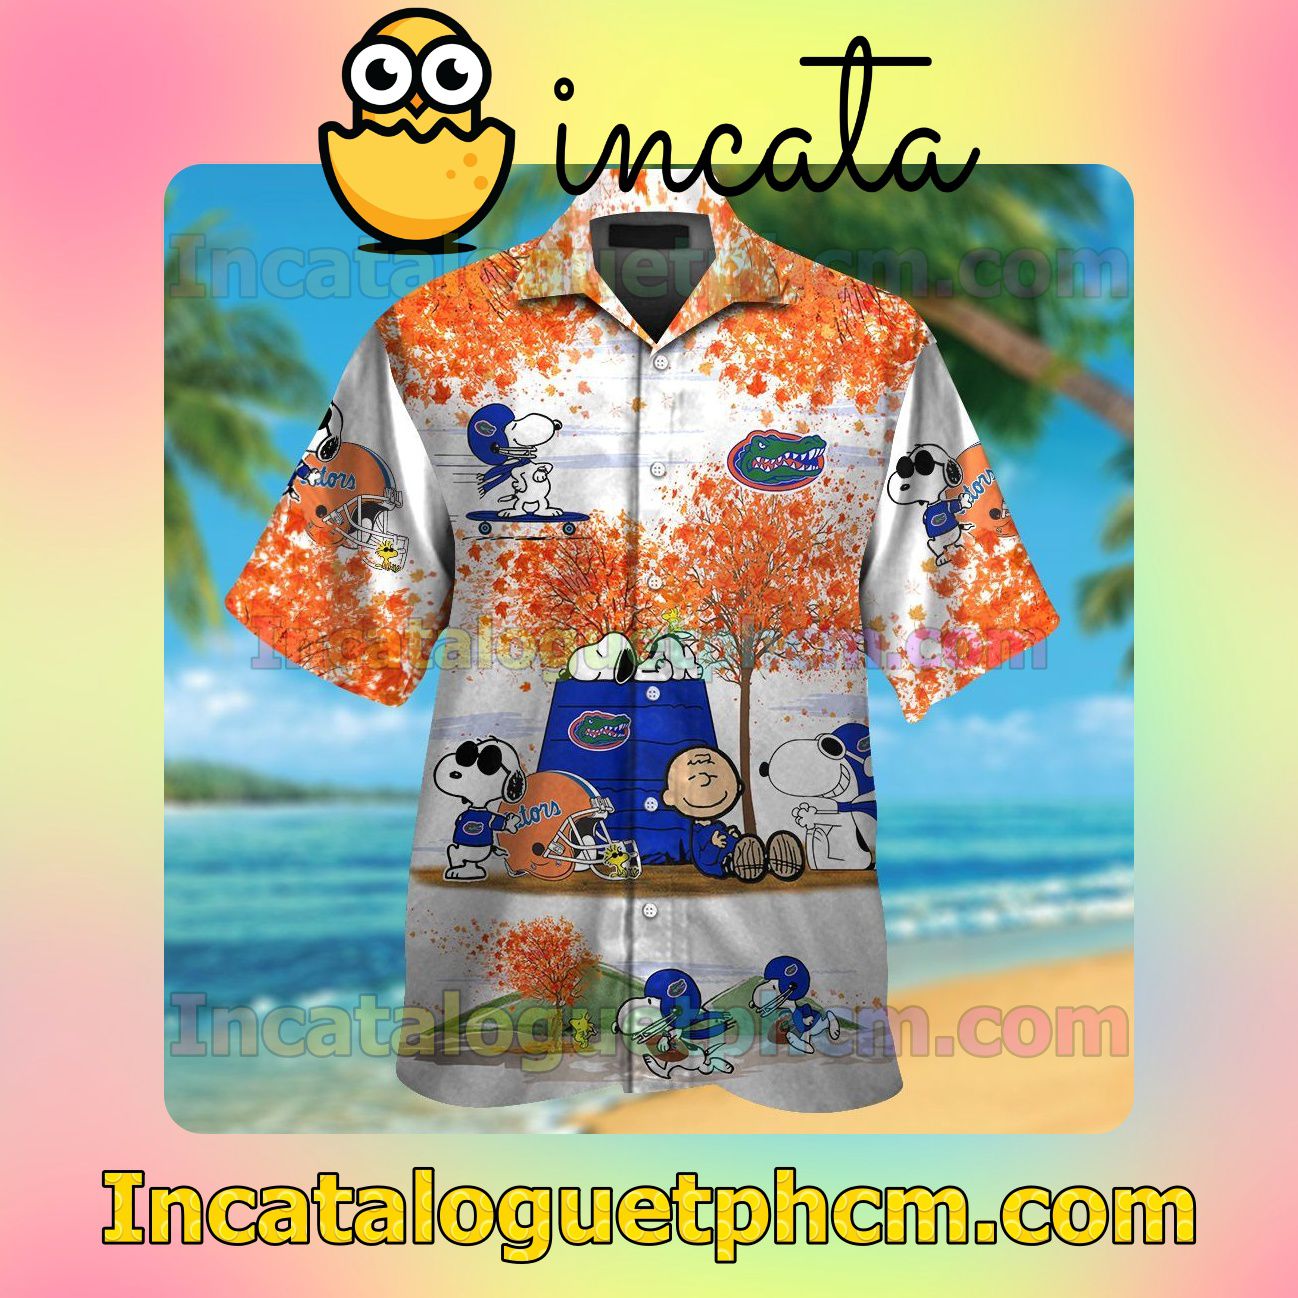 Florida Gators Snoopy Autumn Beach Vacation Shirt, Swim Shorts